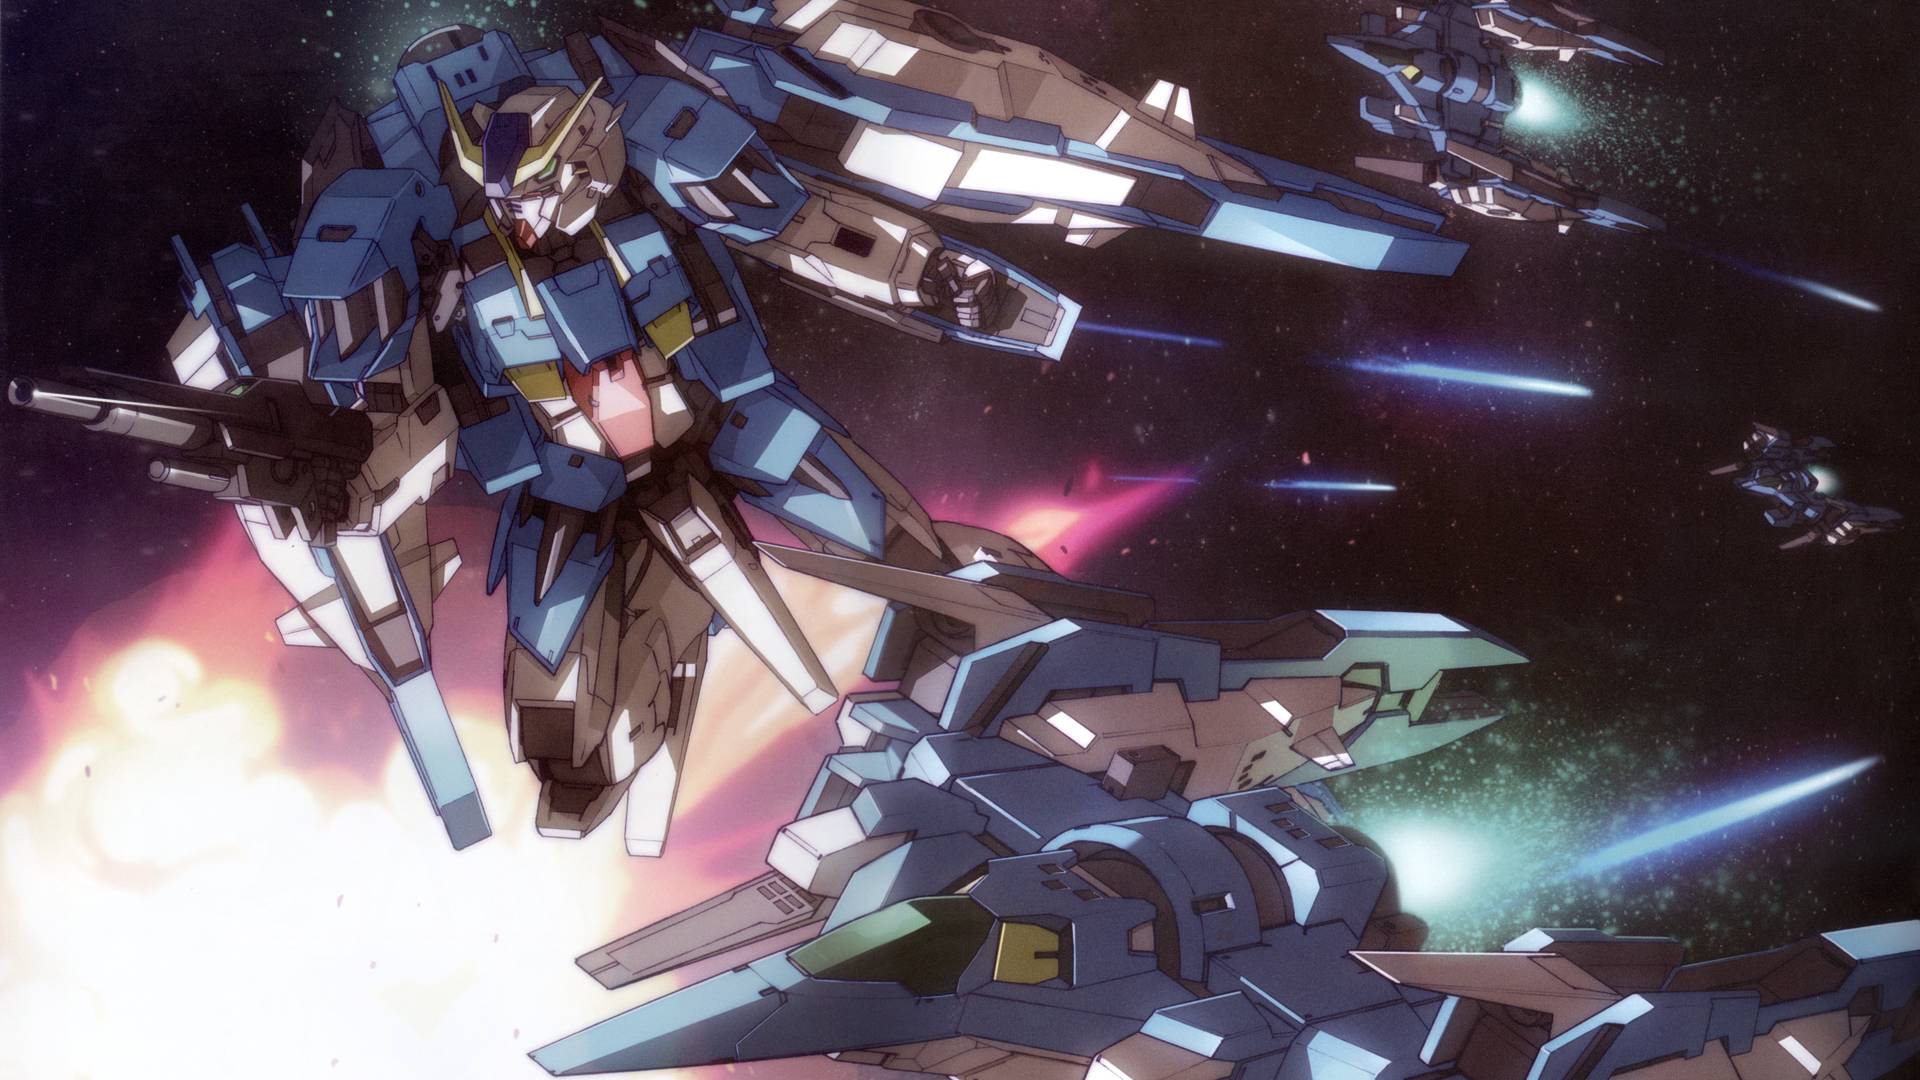 Gundam Full HD Wallpaper And Background Image 1920x1080 ID661216